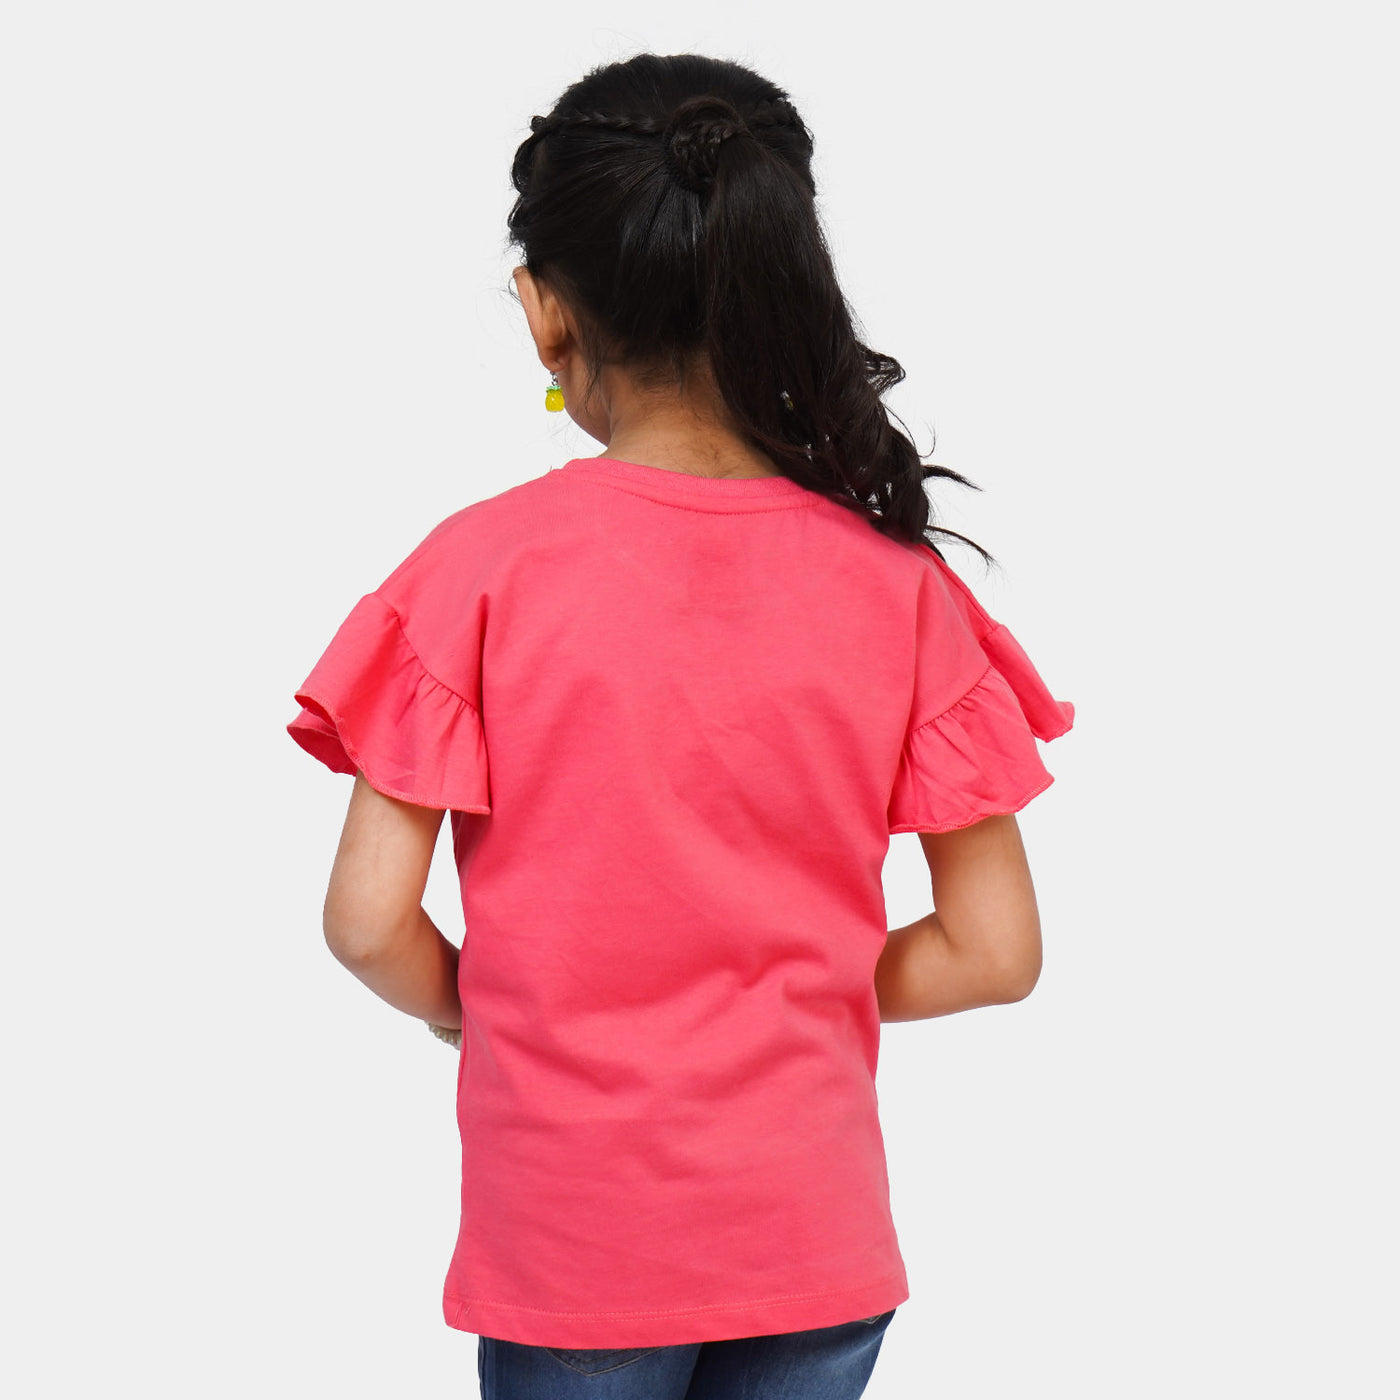 Girls Cotton T-Shirt Character - Hot Pink